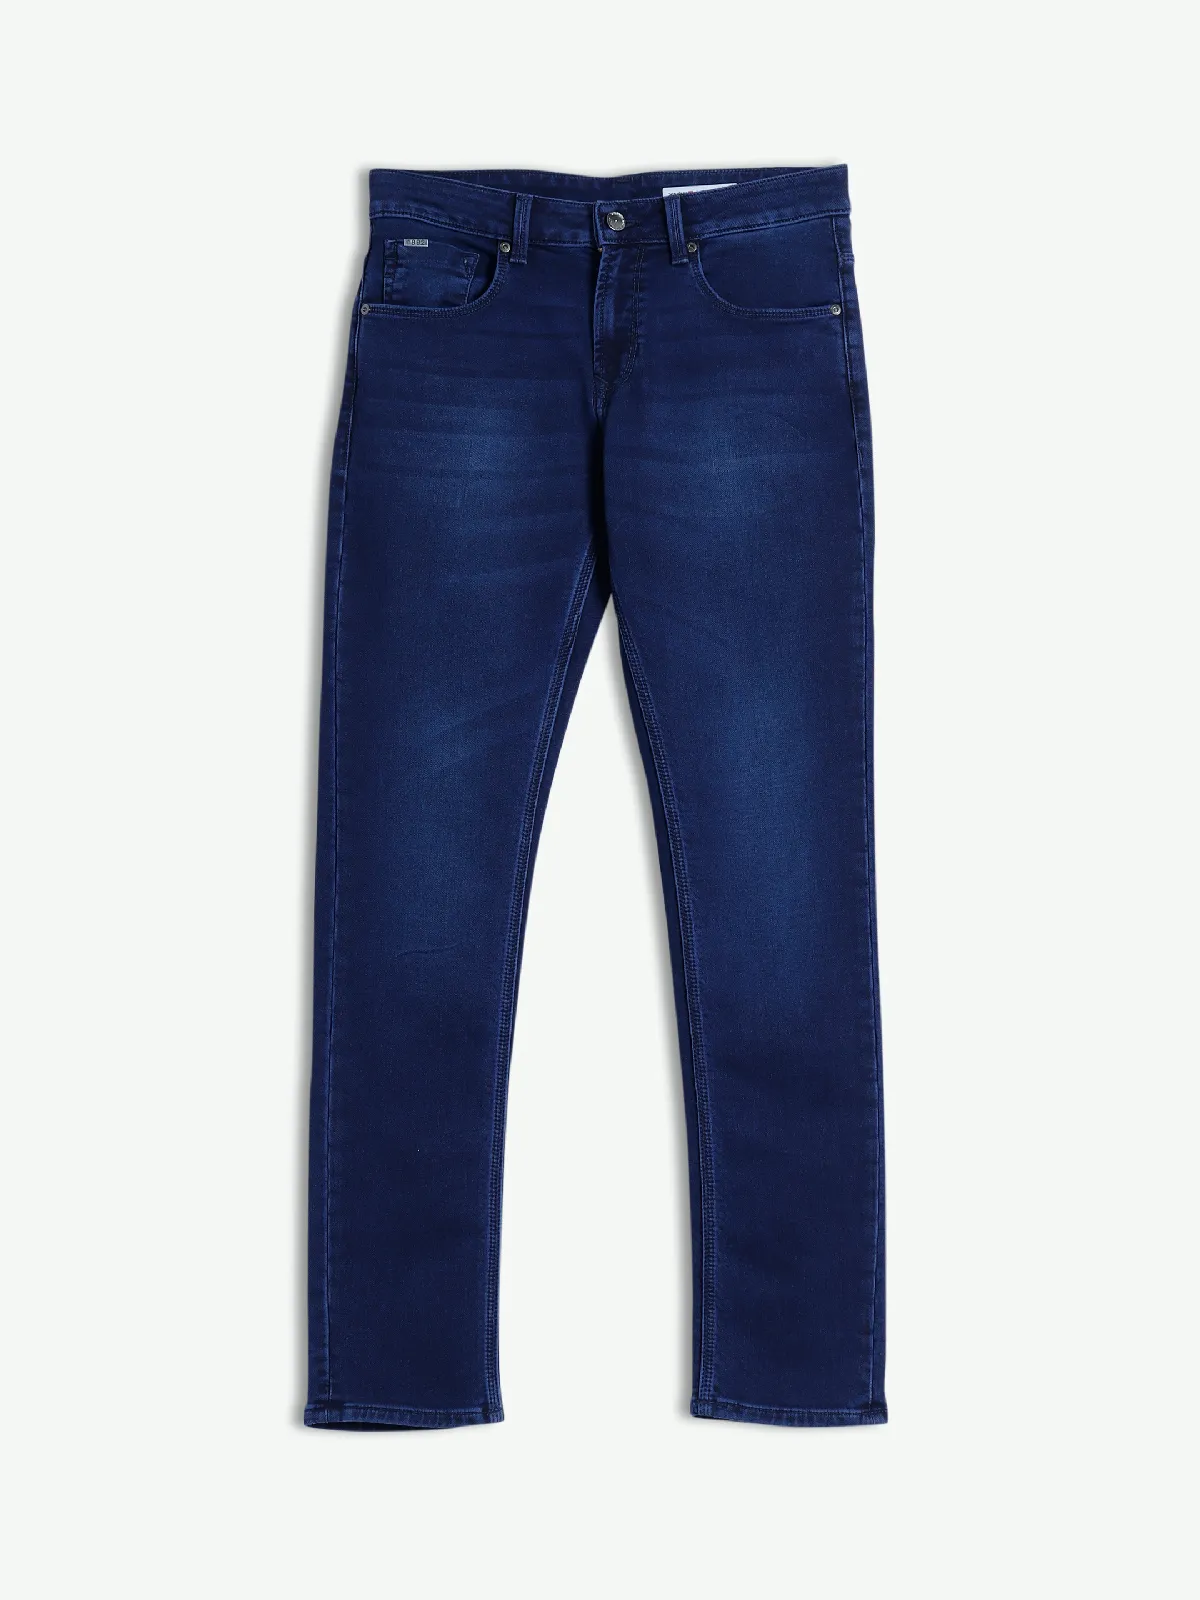 Spykar dark blue washed skinny jeans